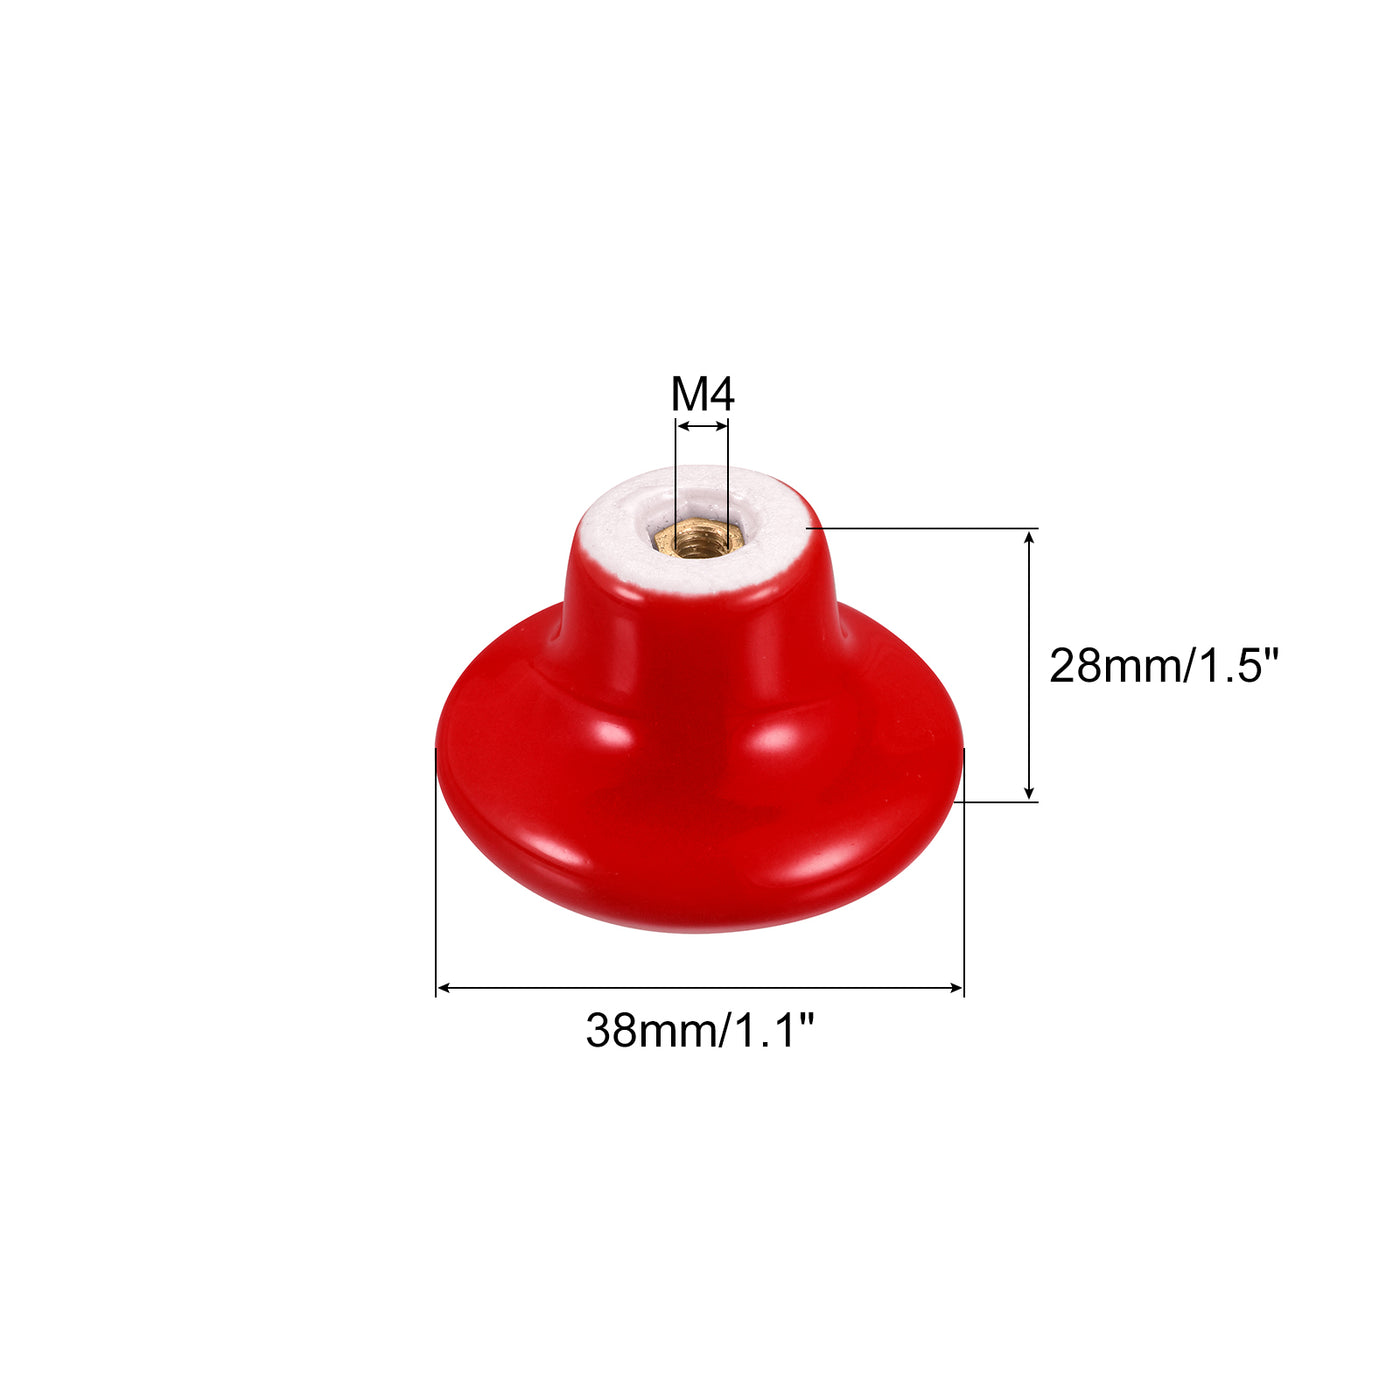 uxcell Uxcell Ceramic Drawer Knobs 15pcs Mushroom Shape Pulls 1.1"x1.5" for Dresser(Red)